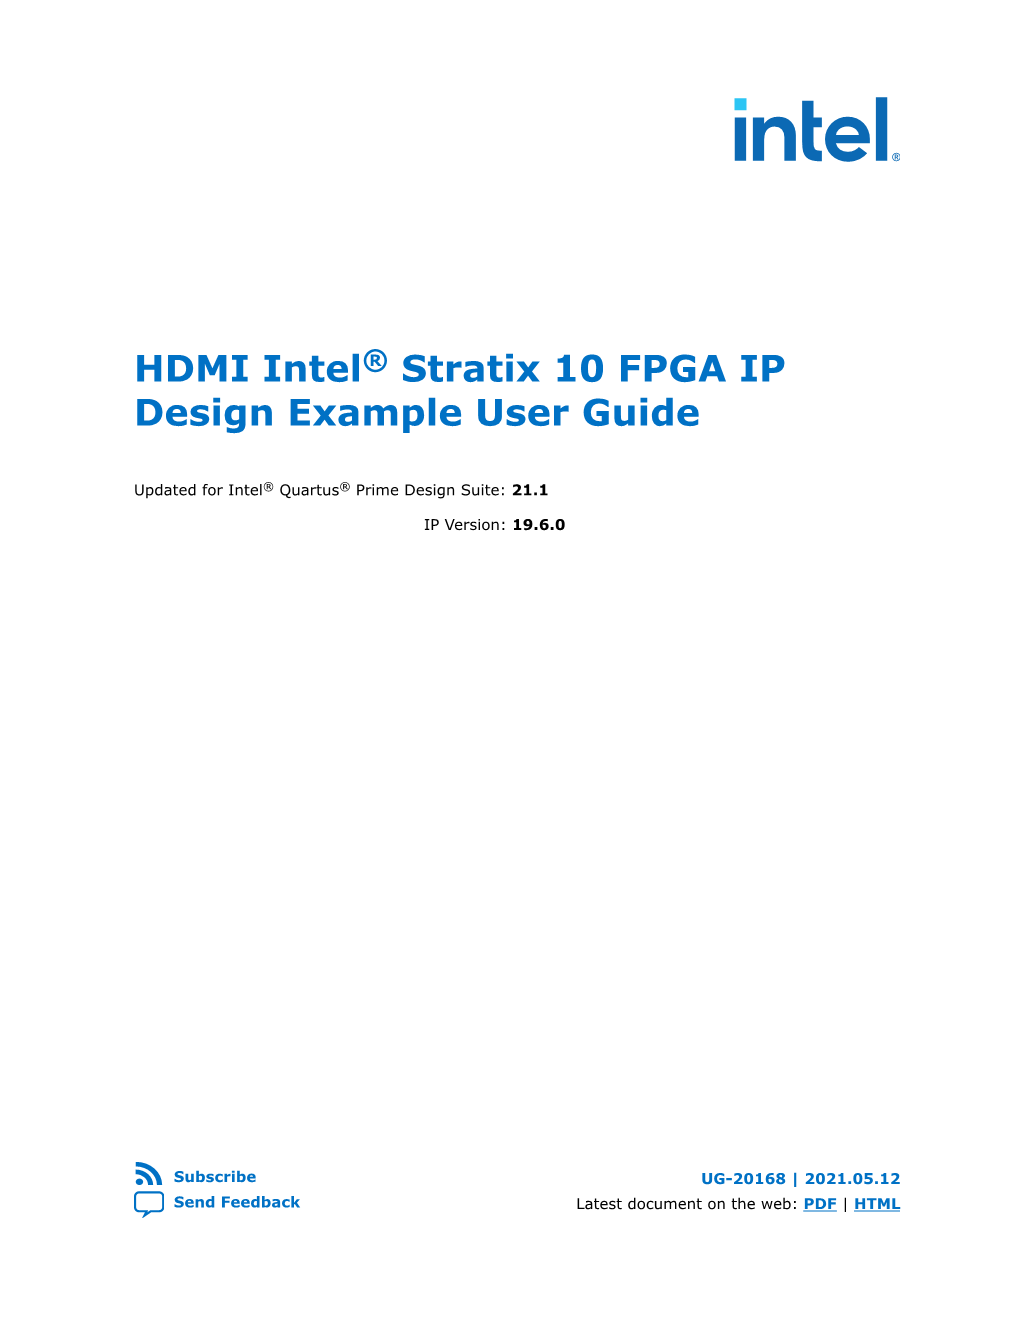 HDMI Intel® Stratix 10 FPGA IP Design Example User Guide.Pdf